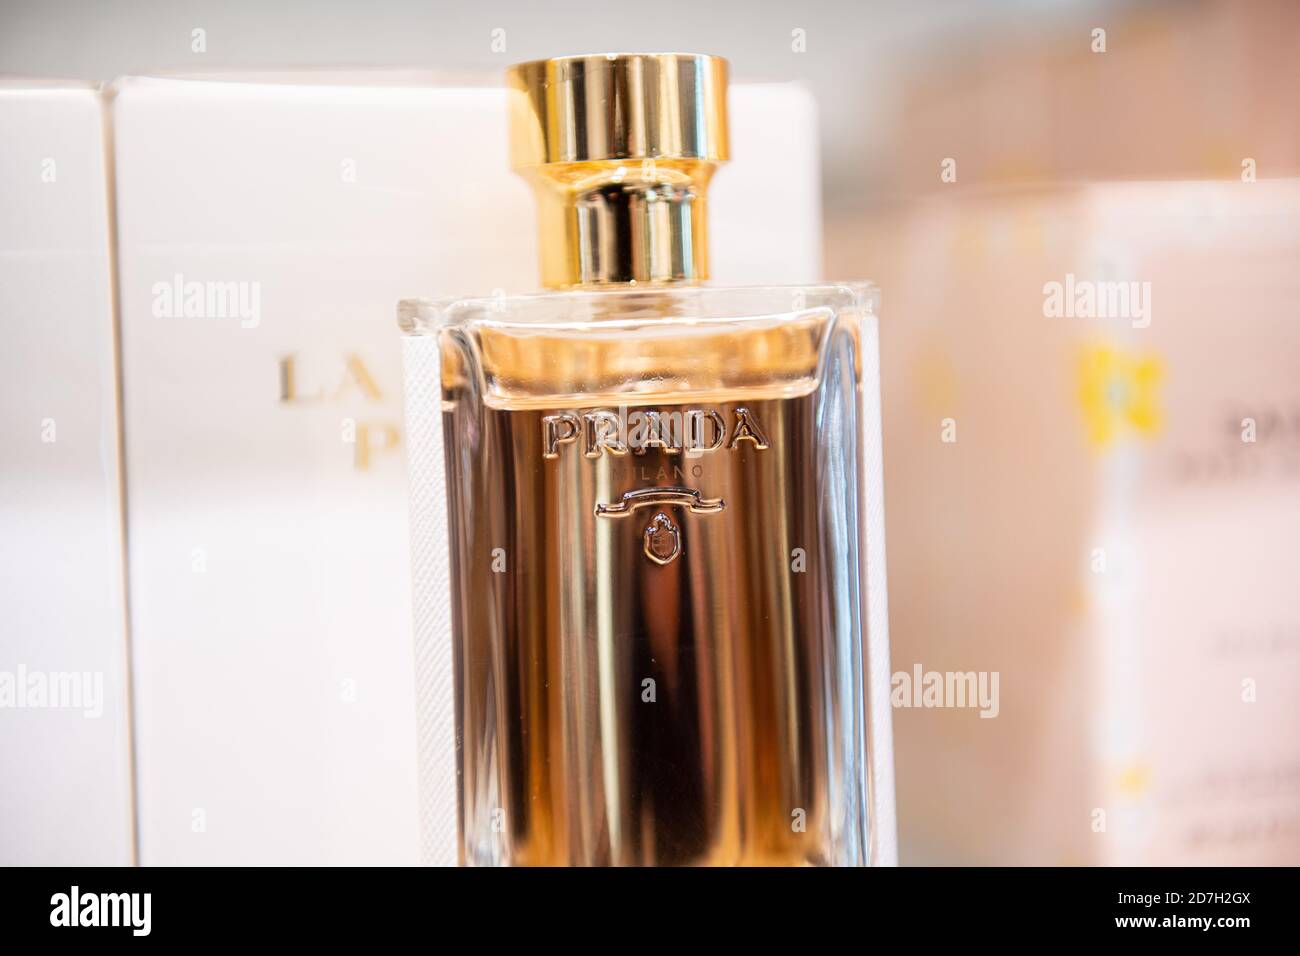 Prada perfume hi-res stock photography and images - Alamy